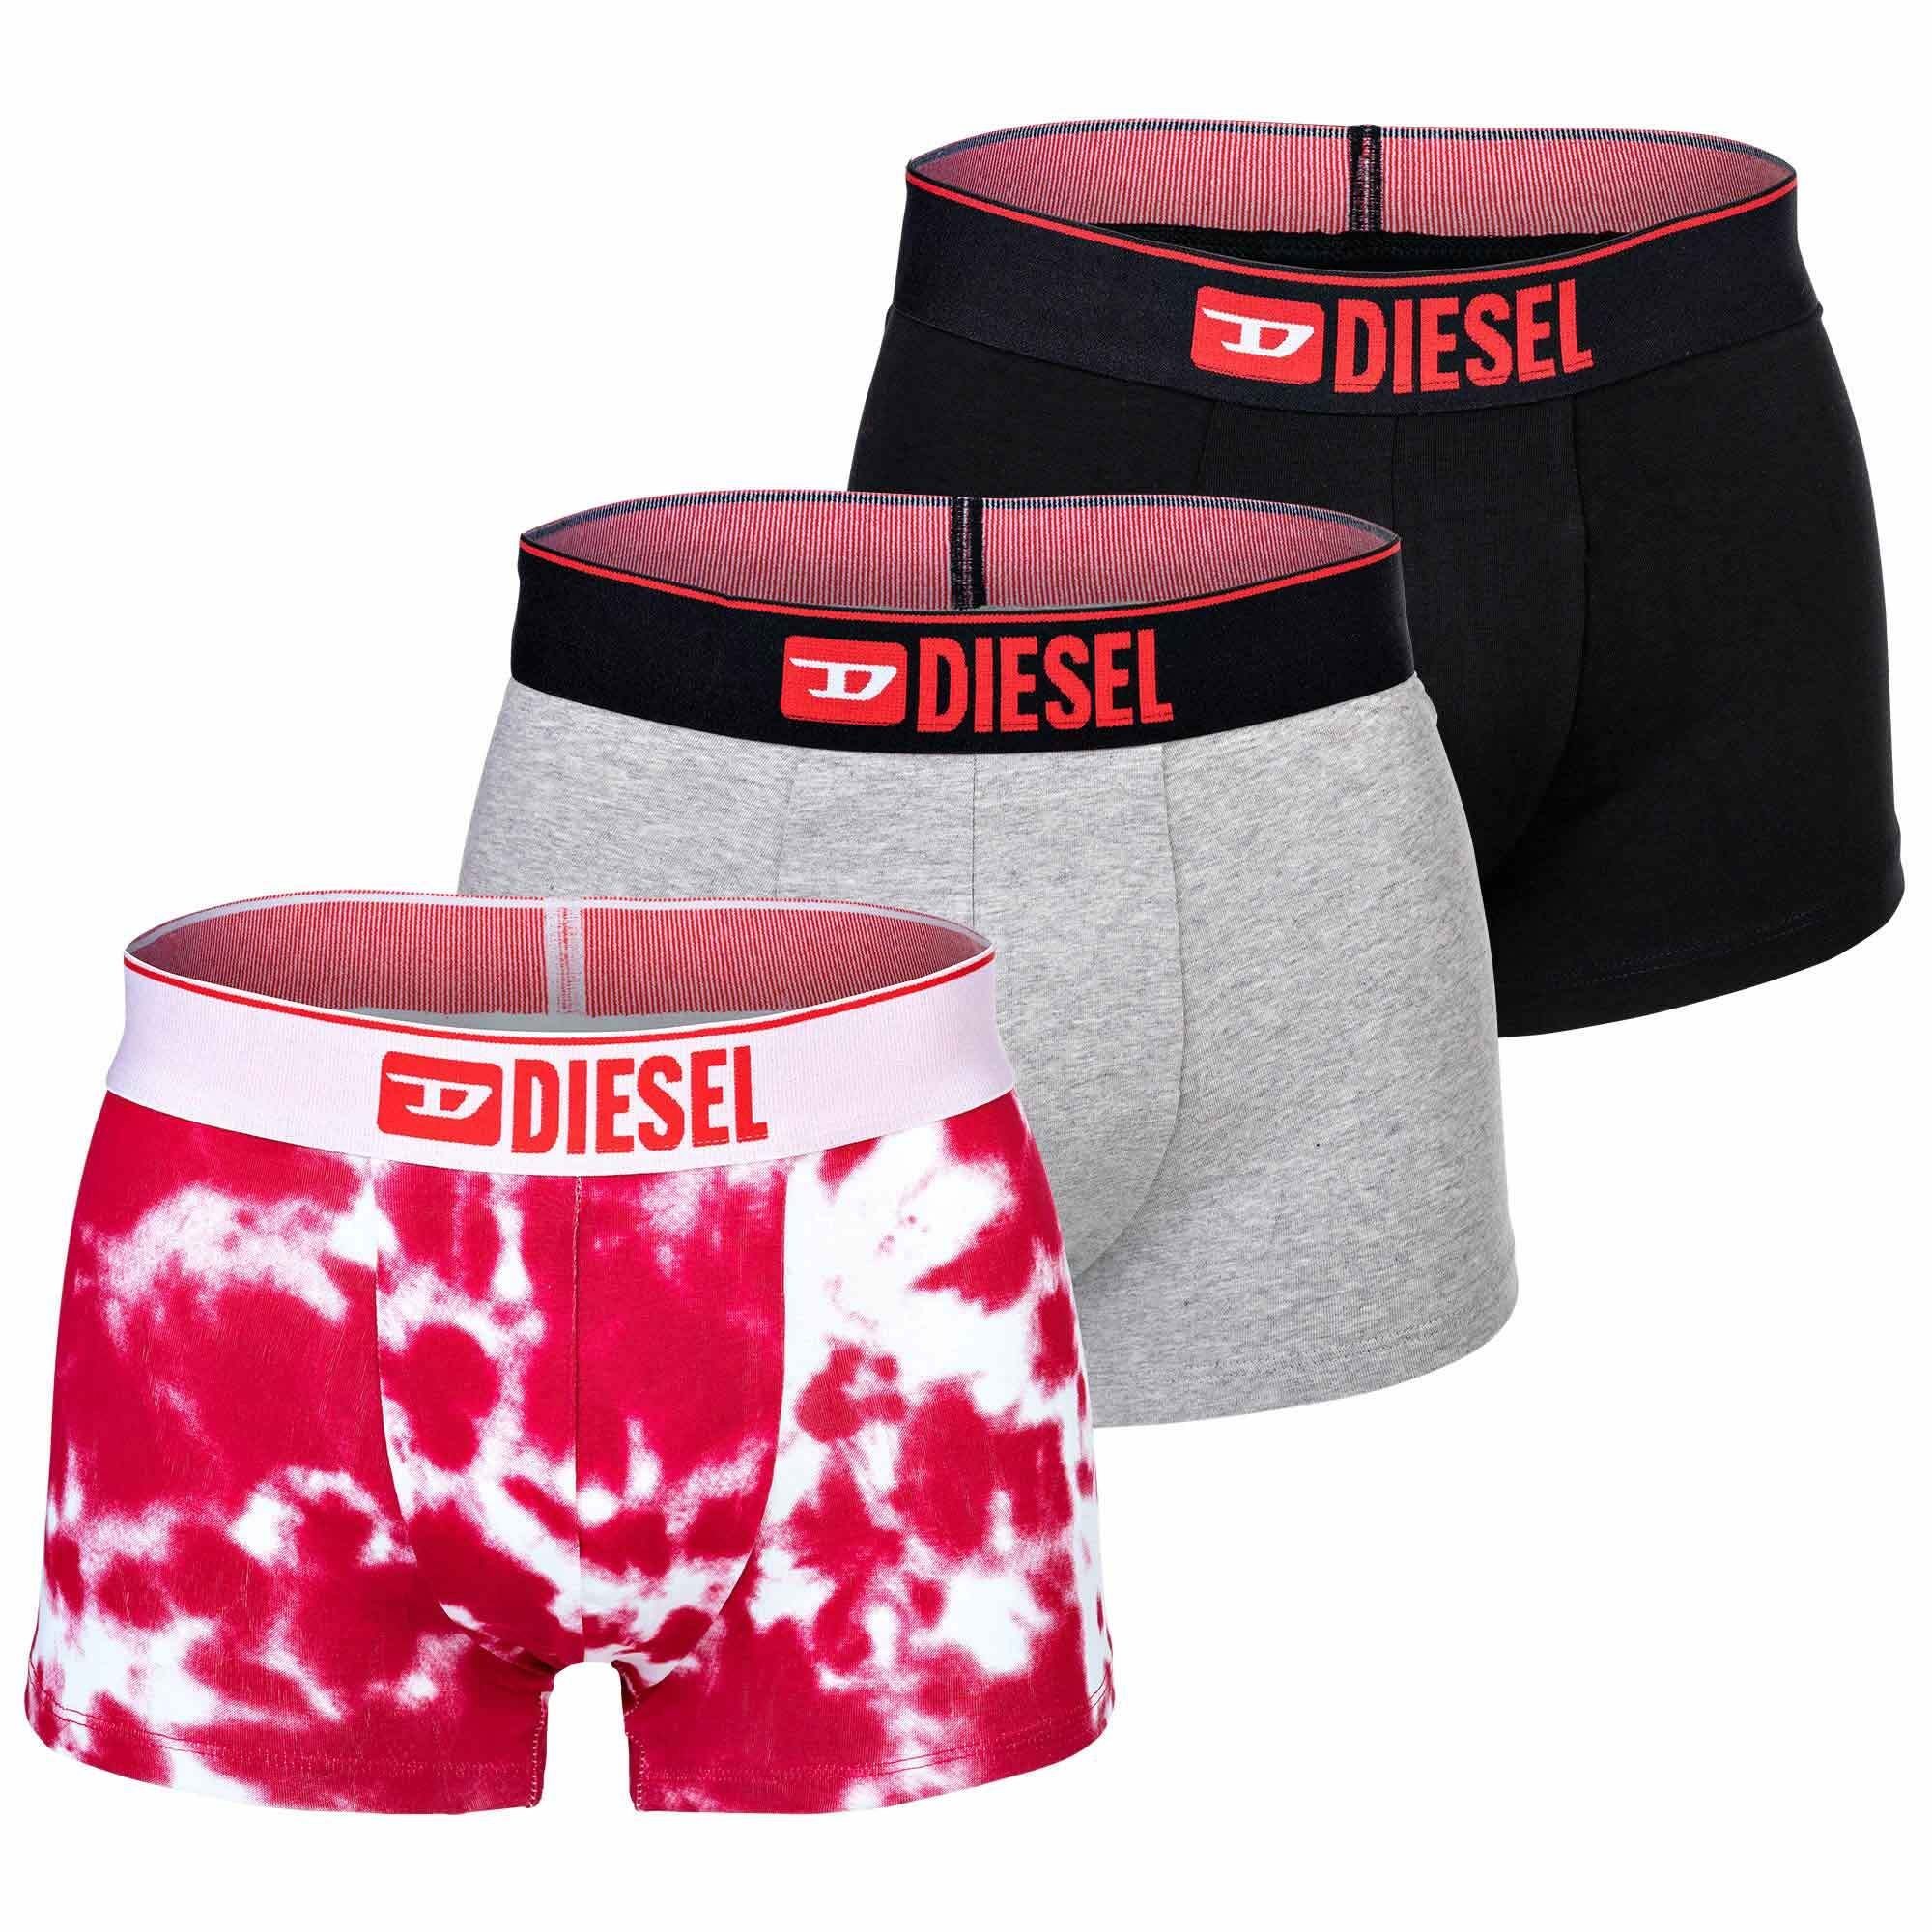 Herren Diesel Boxer - 3er Pack Schwarz/Grau/Rot Boxershorts,